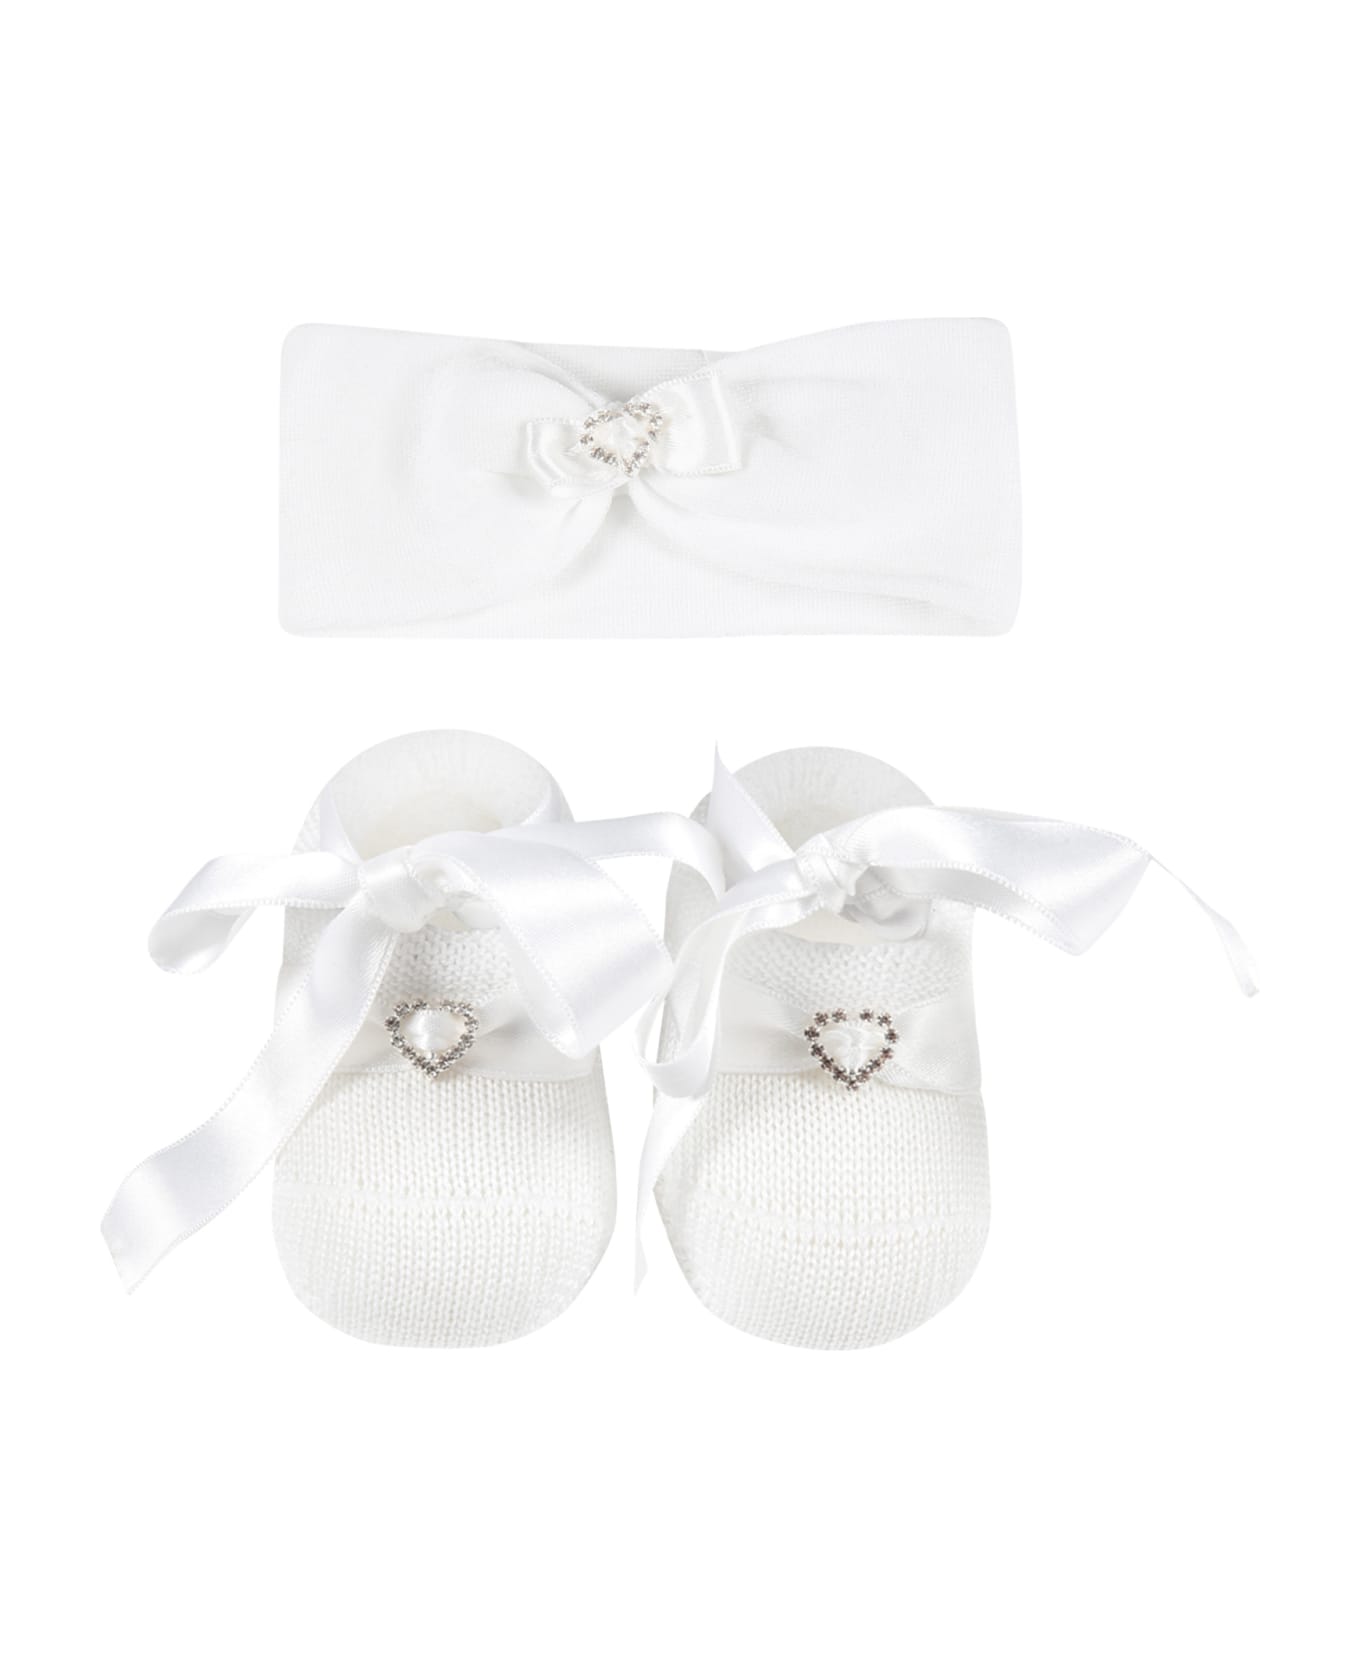 La Perla White Set For Baby Girl - White